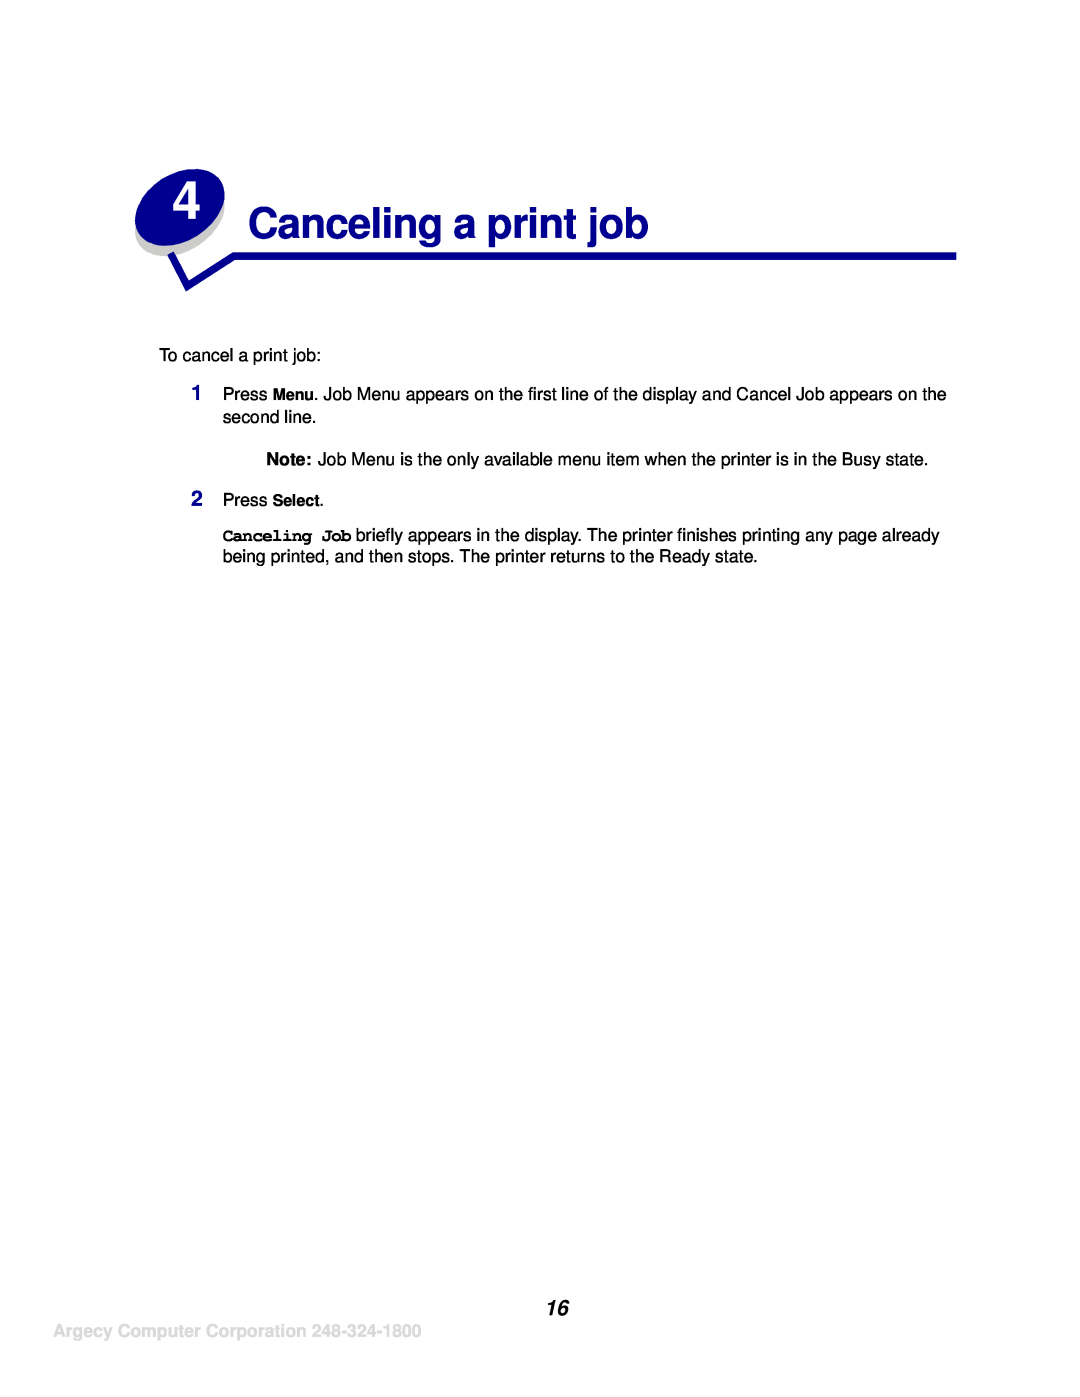 IBM 1125, 1120 manual Canceling a print job, Argecy Computer Corporation 